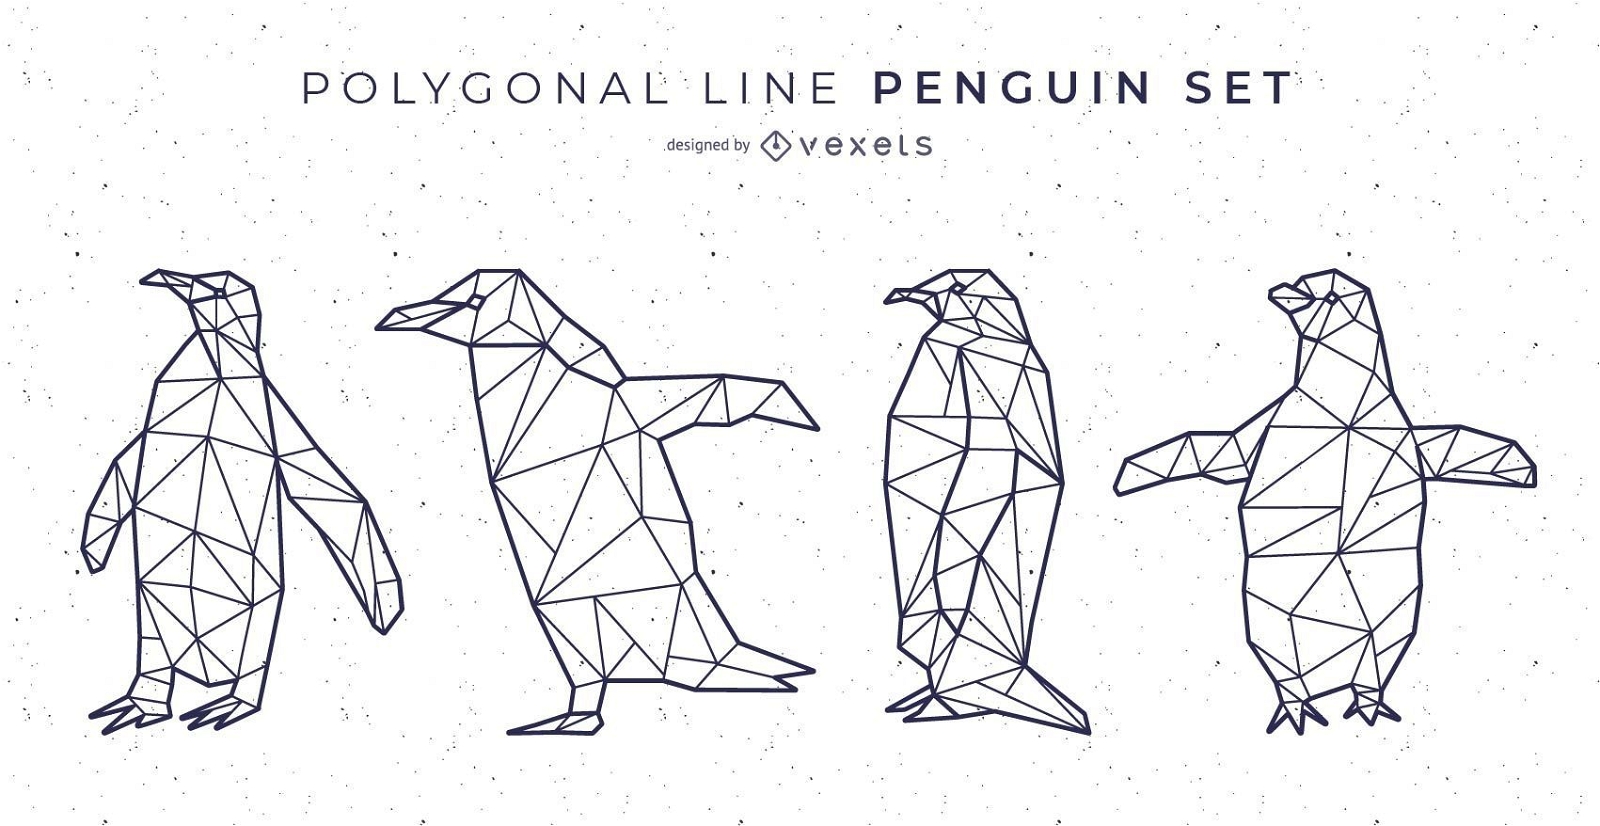 Conjunto de vector de pingüino de línea poligonal